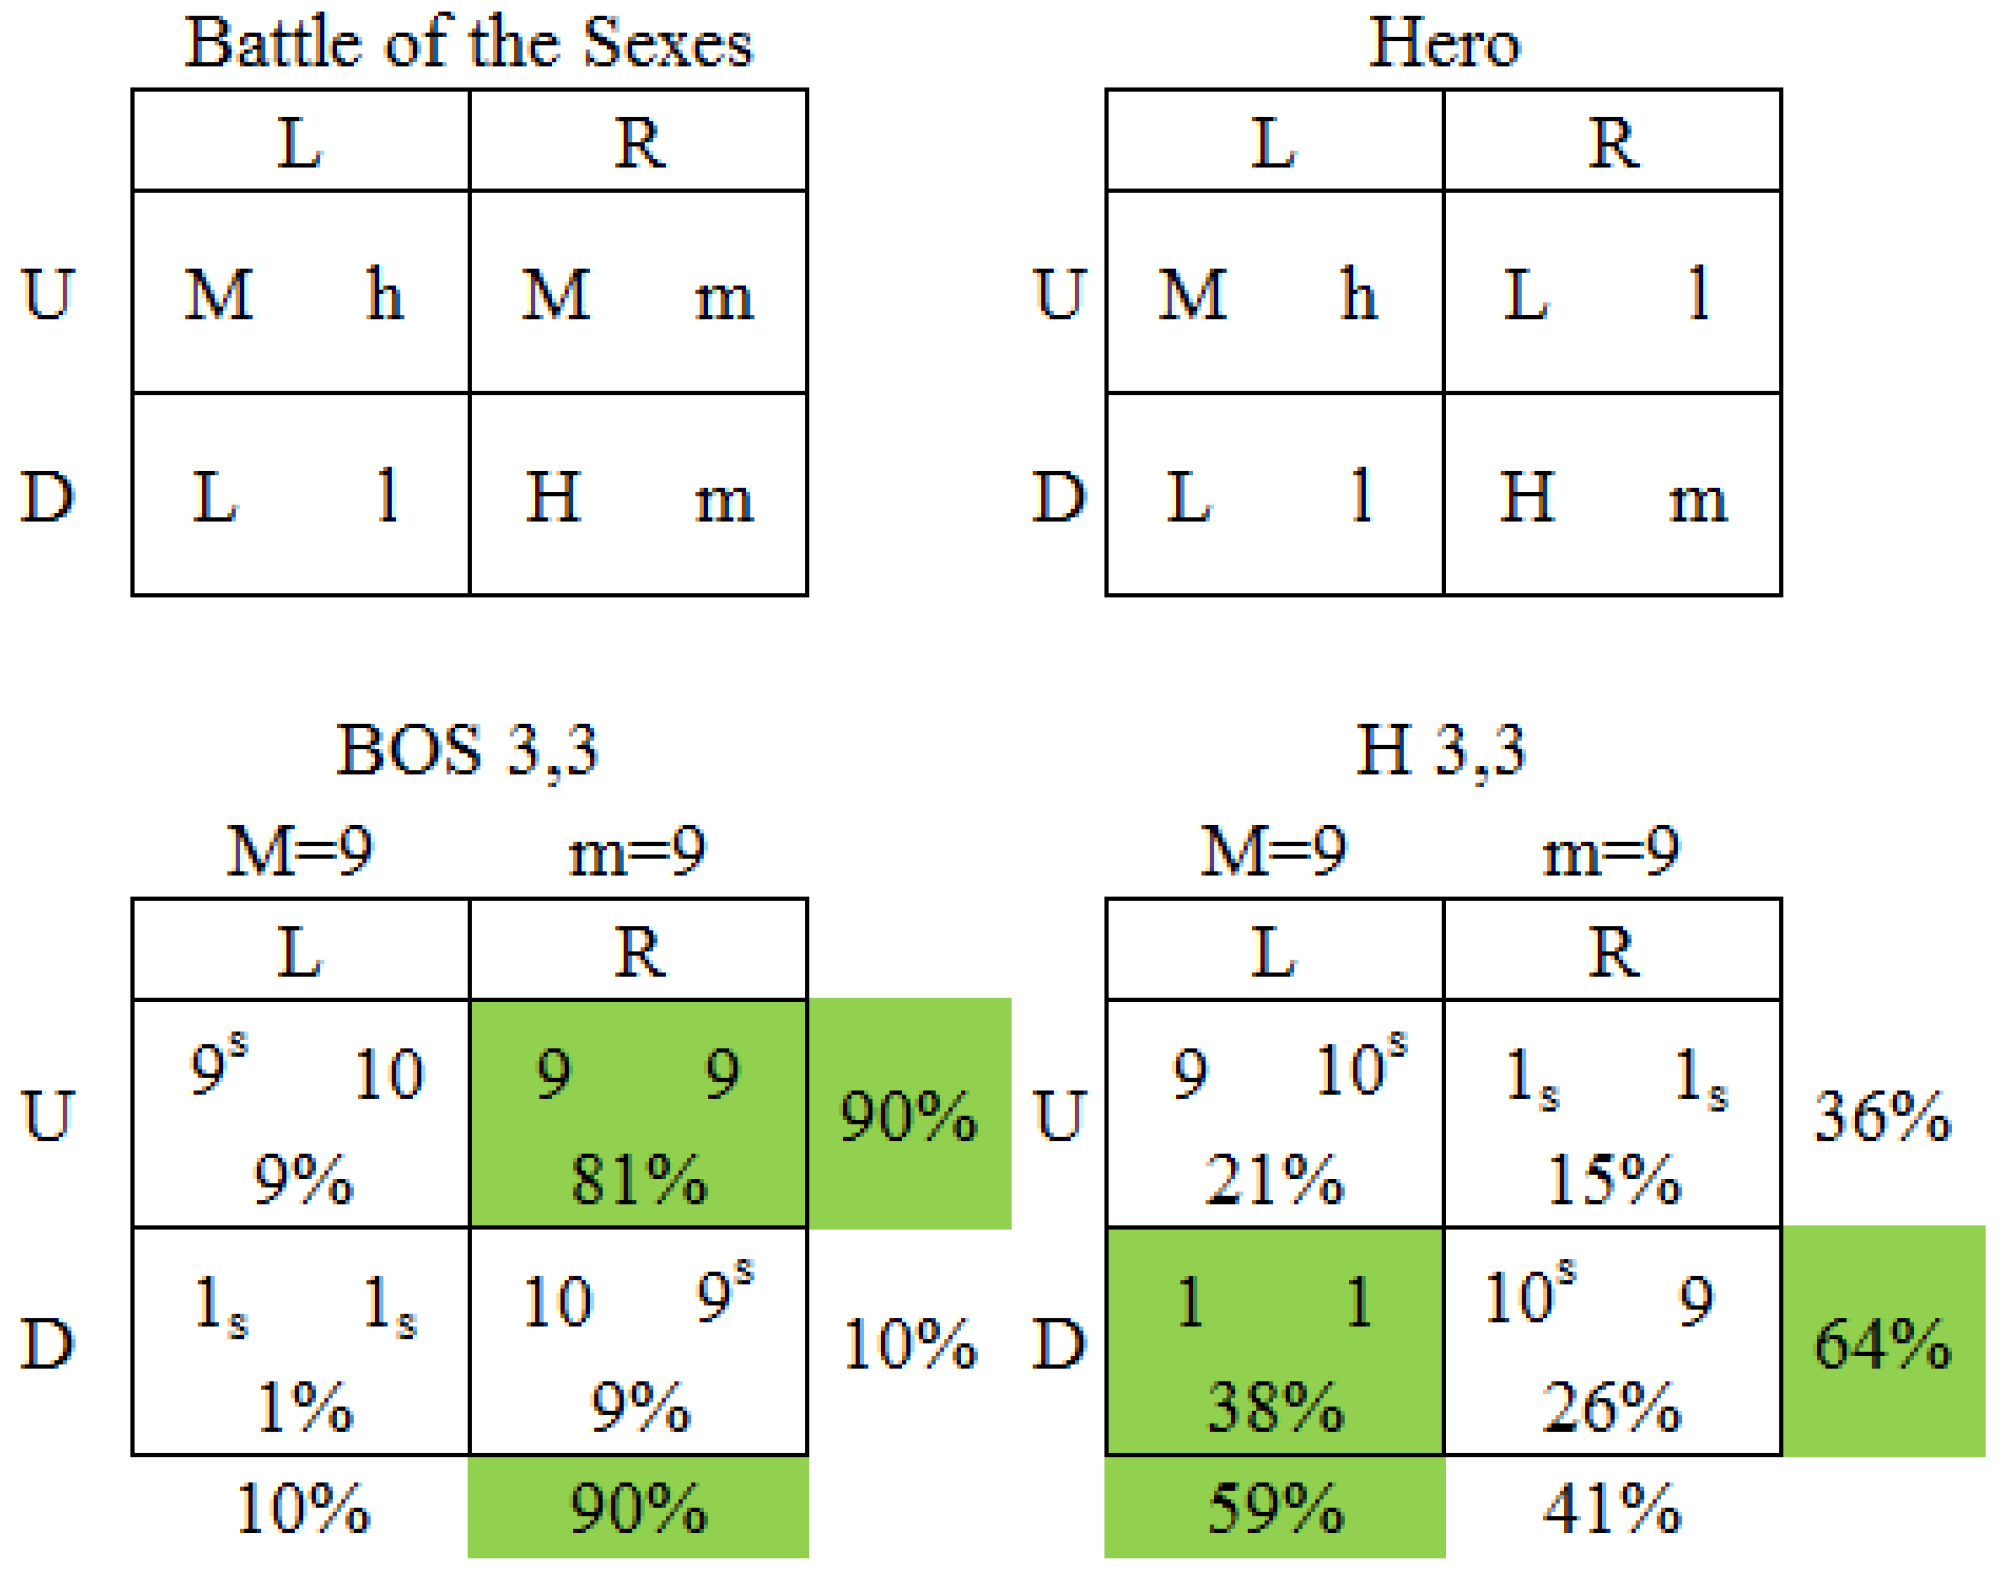 the 3 battles in min hero 2-2